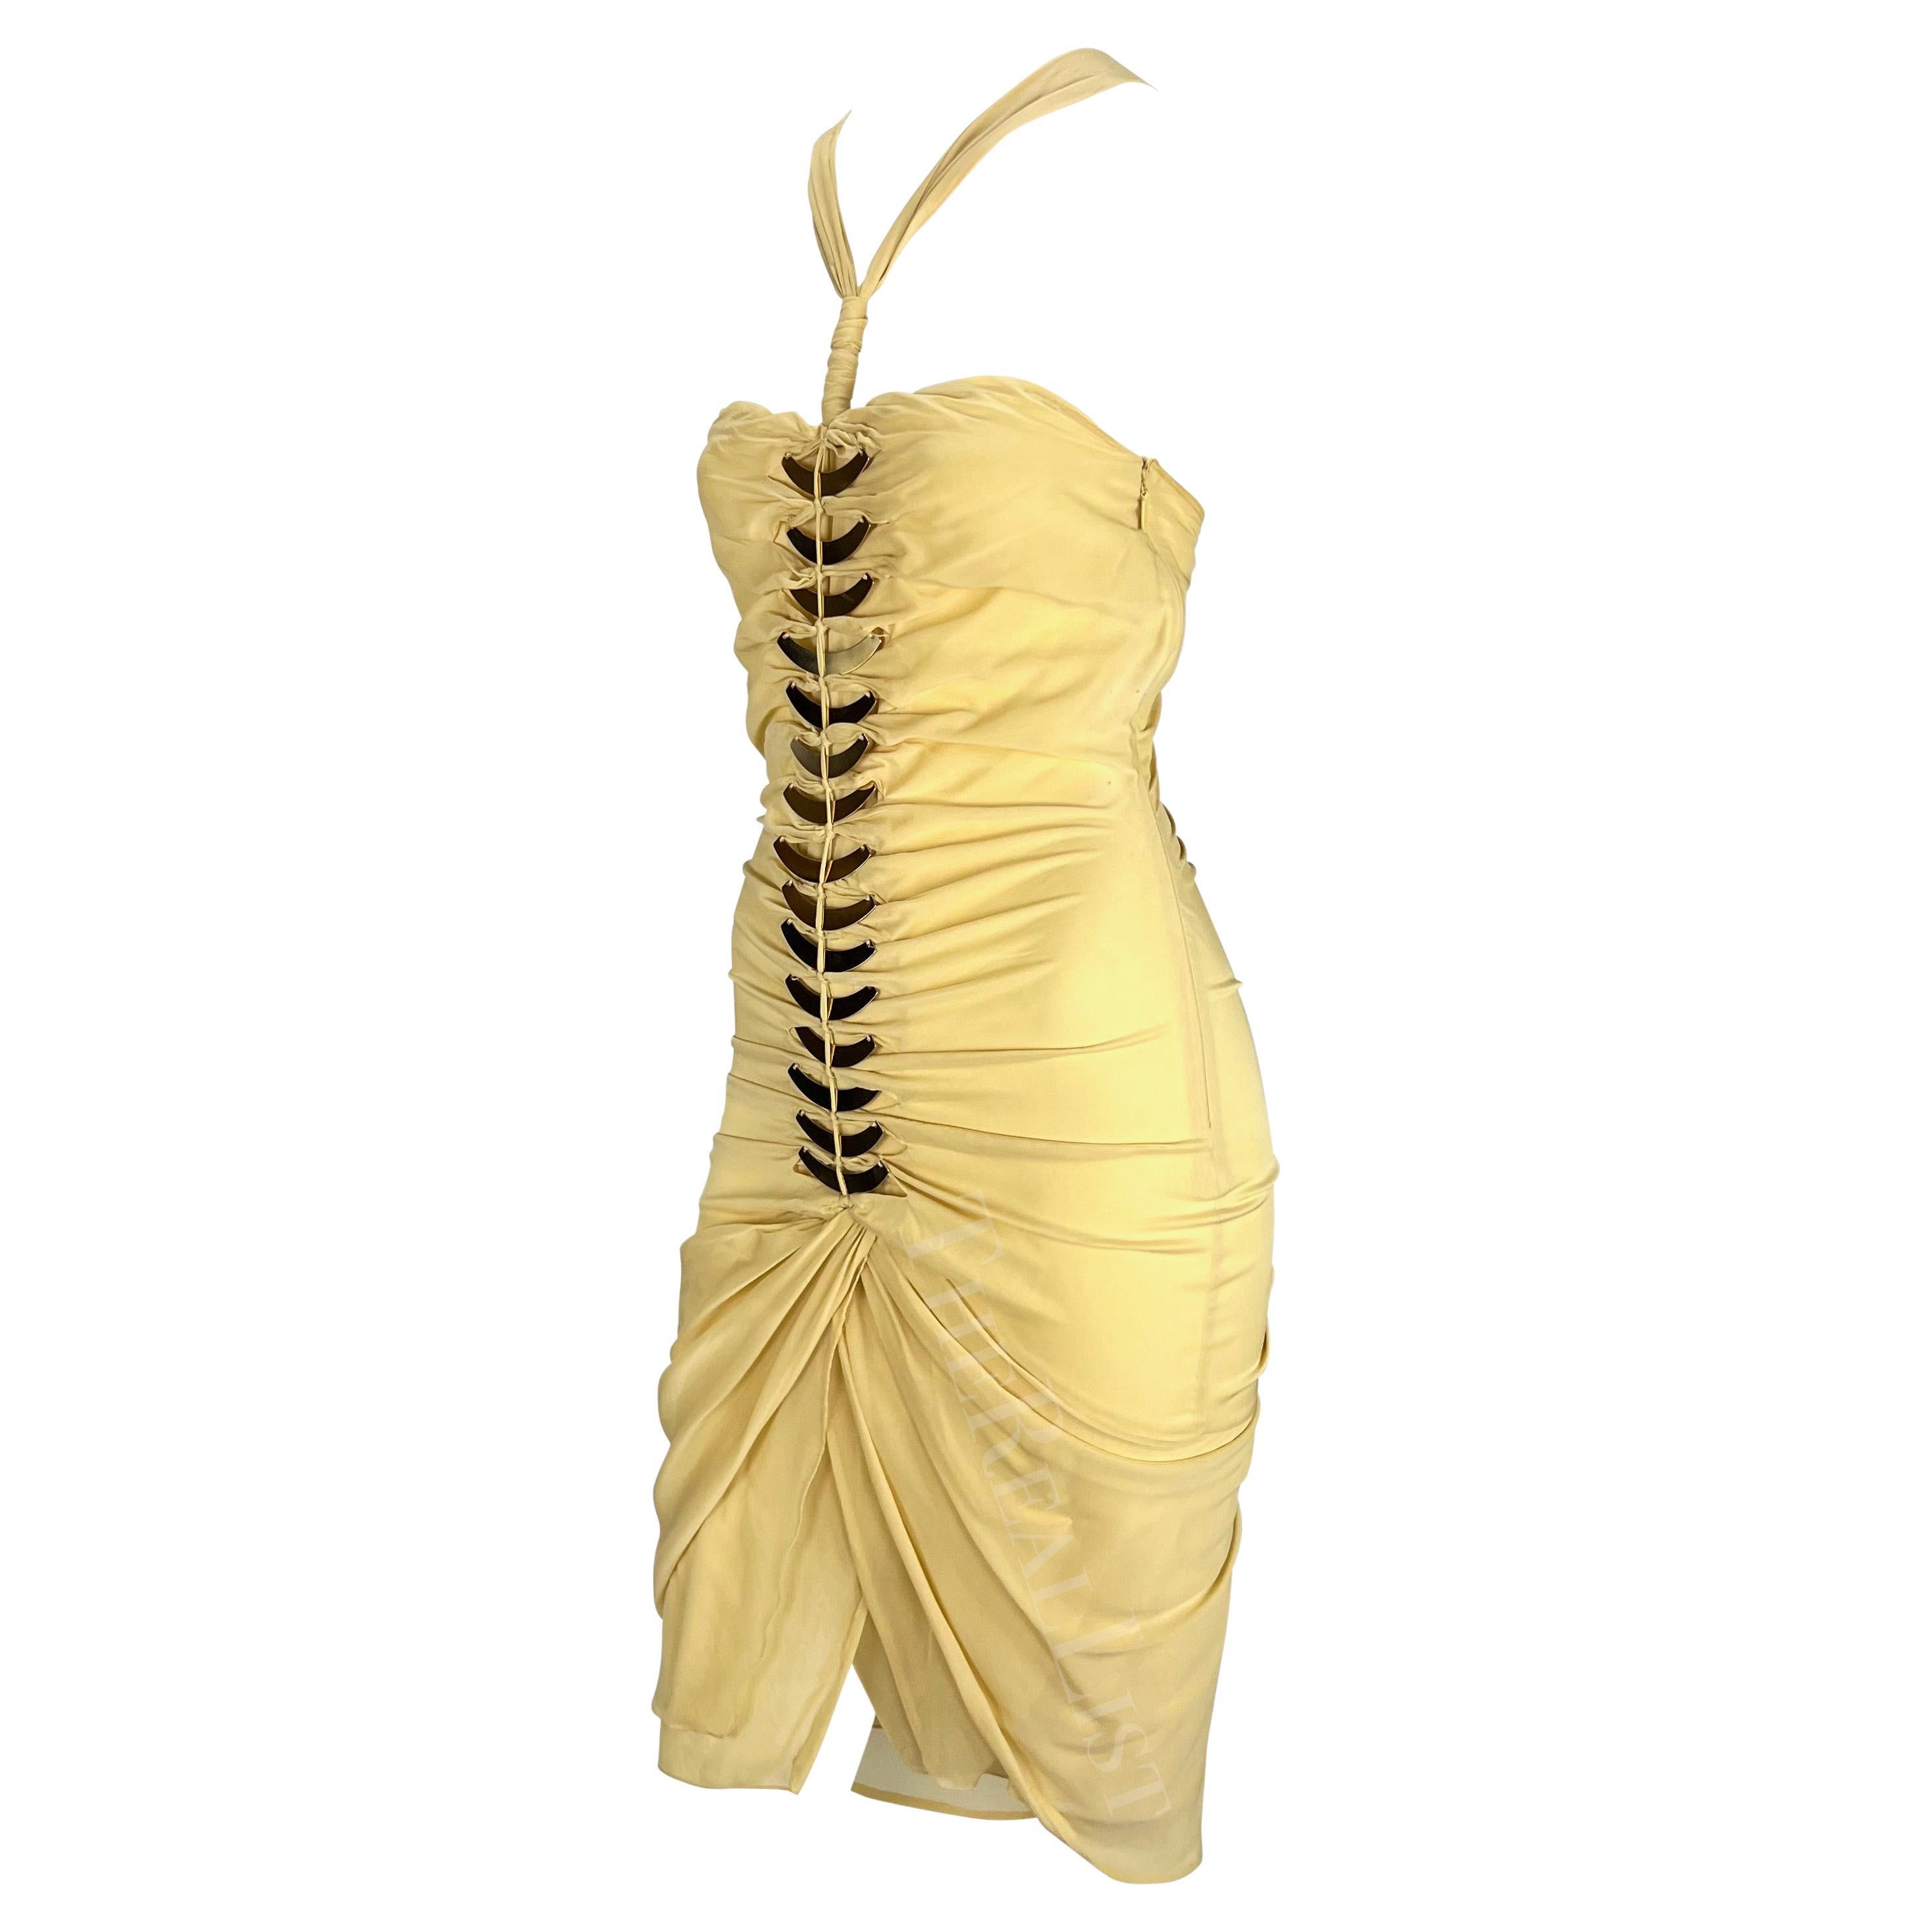 Women's S/S 2005 Gucci Beige Cutout Gold-Tone Metal Spine Bodycon Mini Dress For Sale